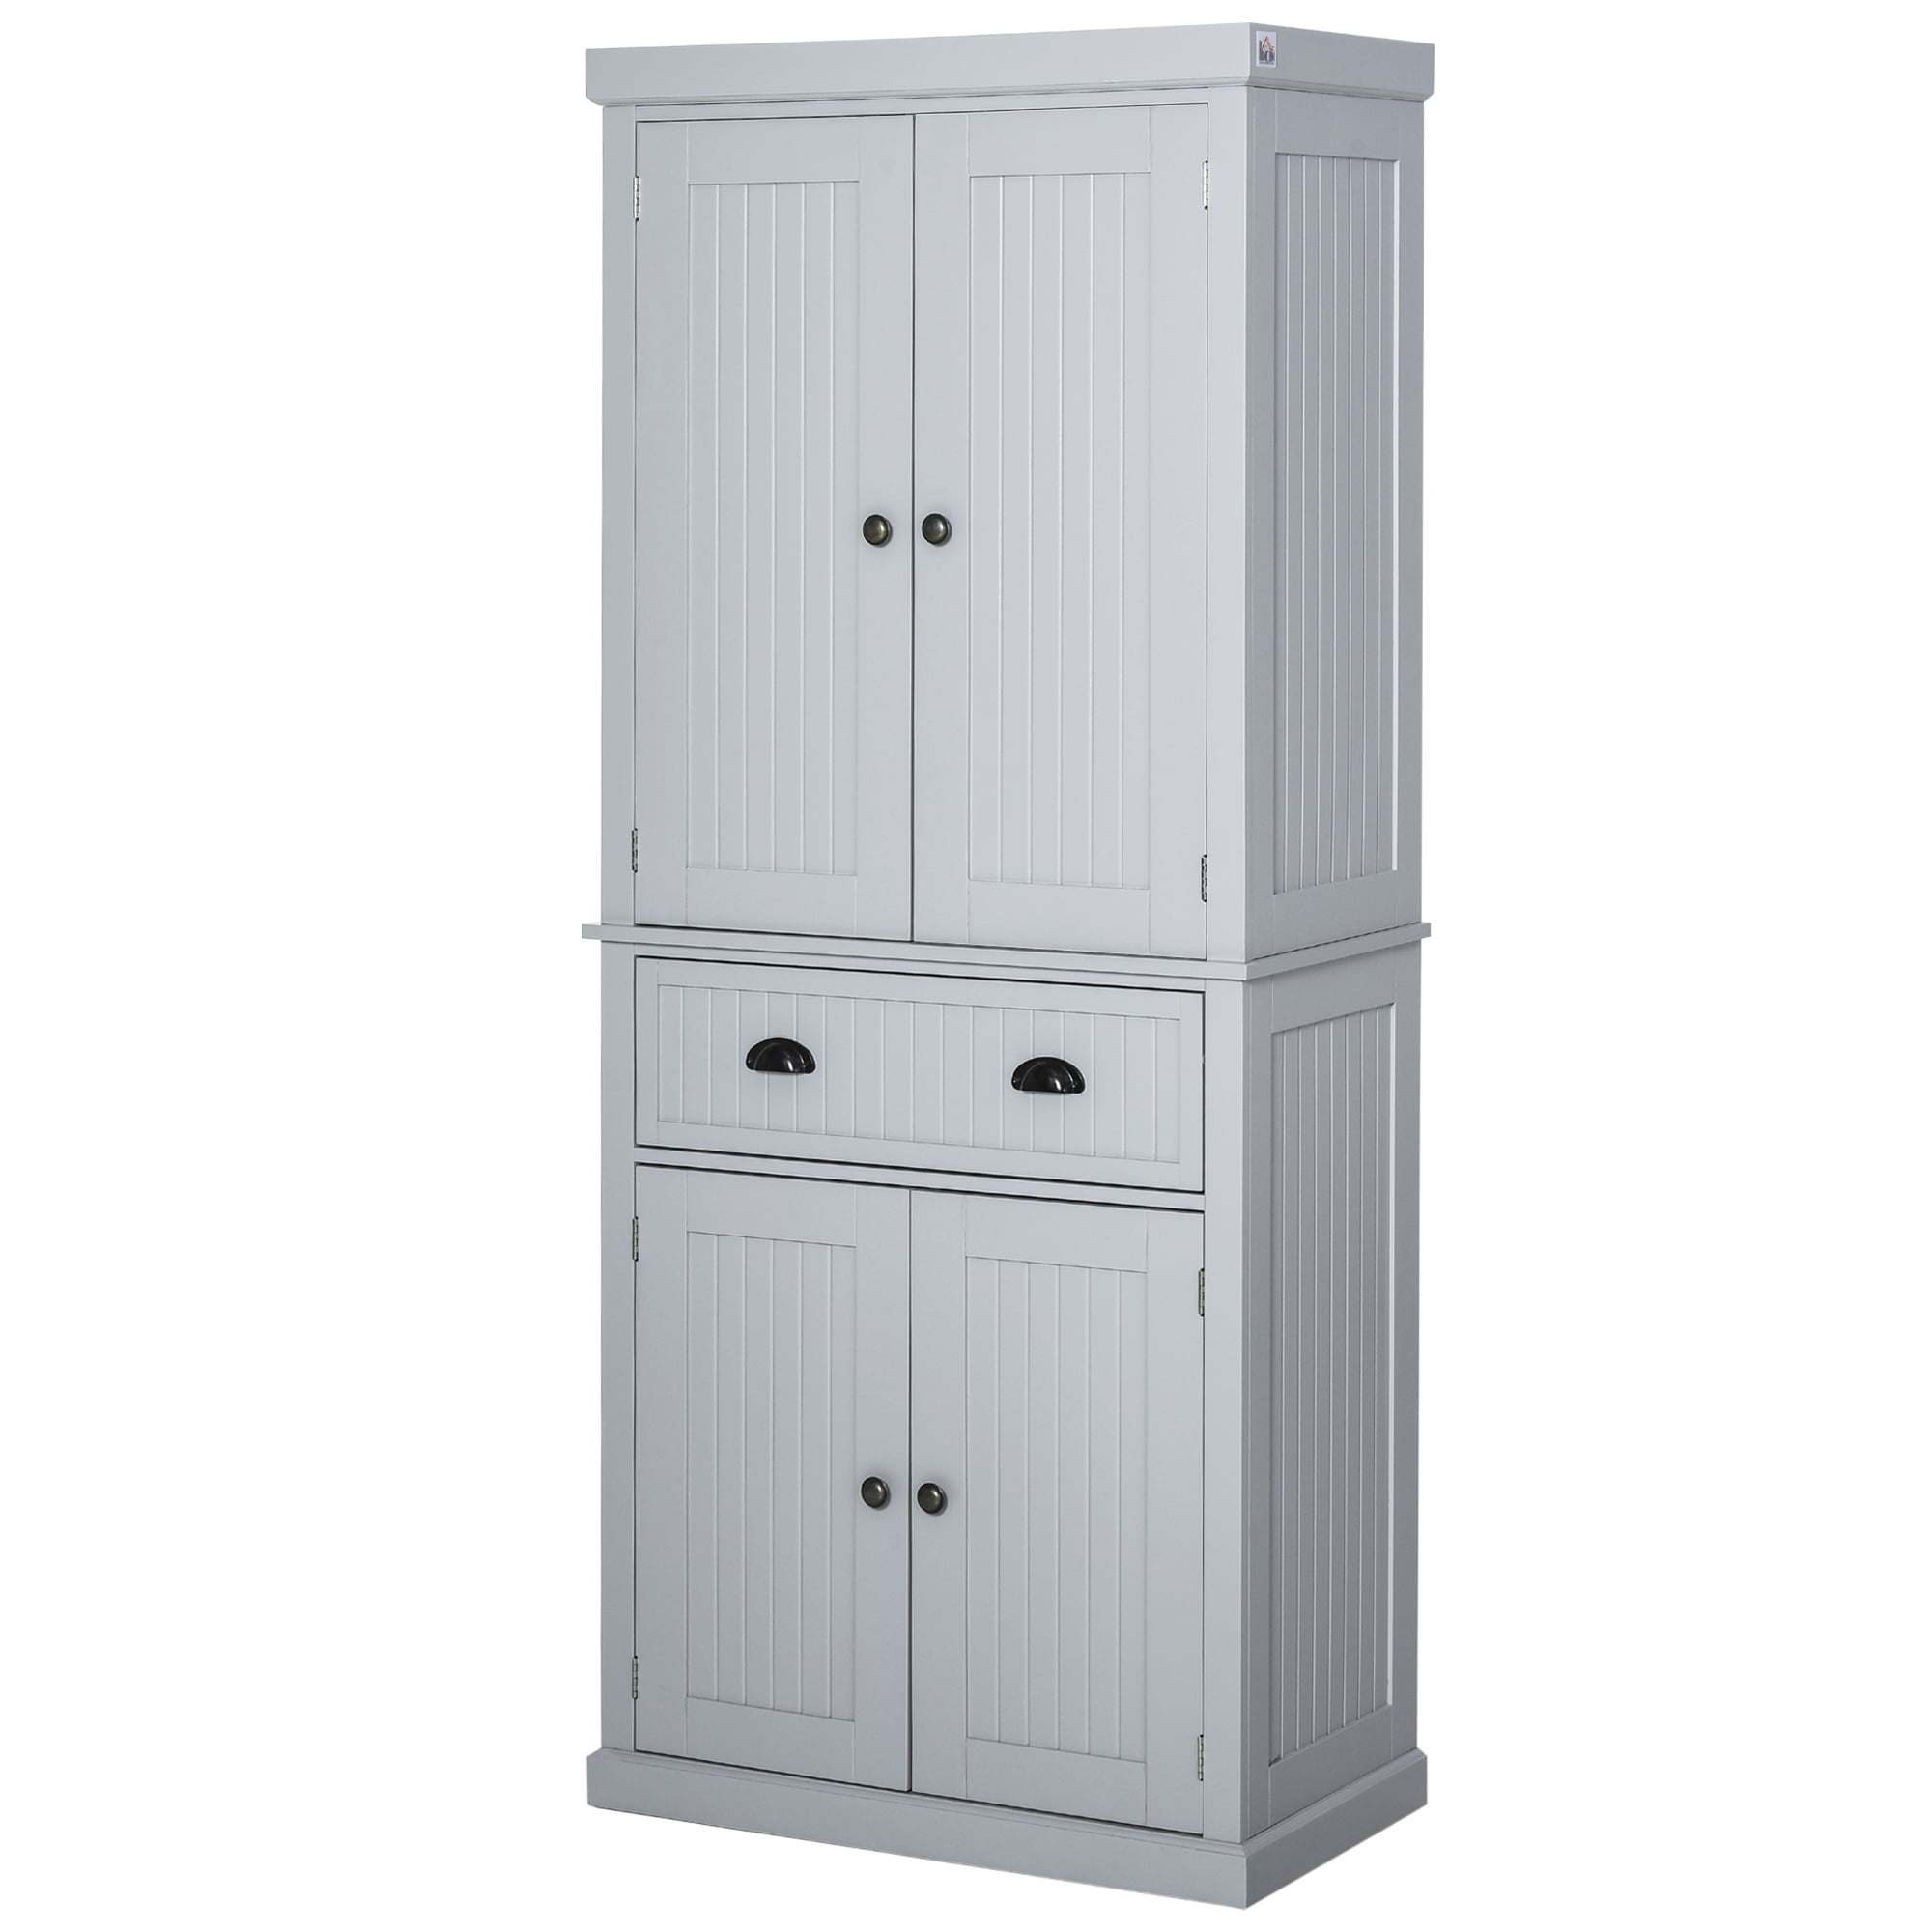 Tall Storage Cabinet Kitchen Pantry Cupboard Organizer Furniture Home White 